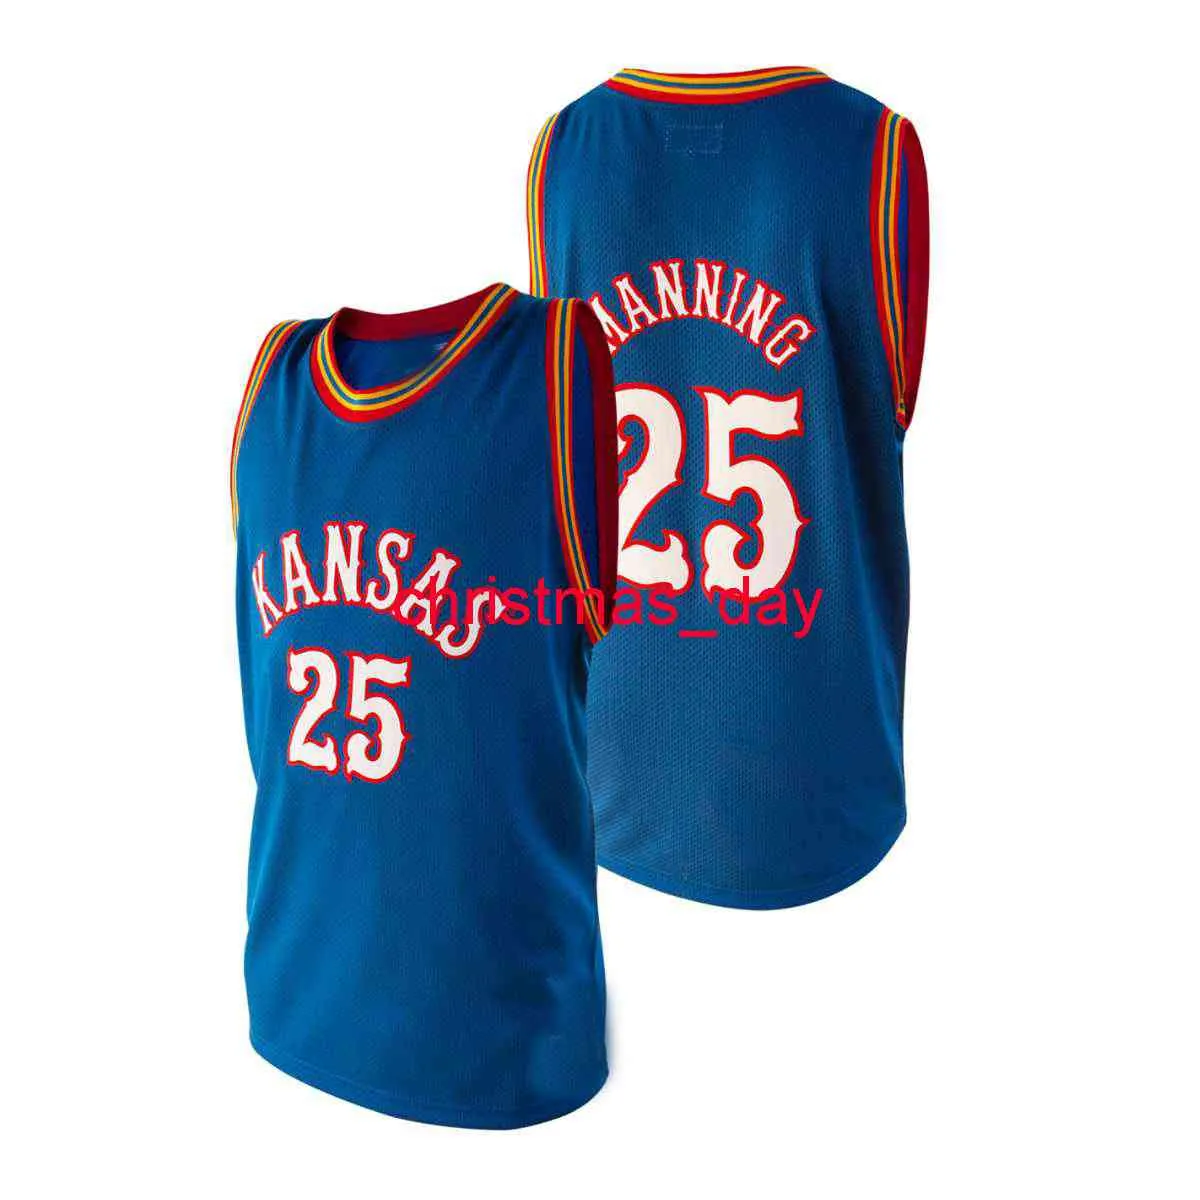 Genähtes, individuelles Kansas Jay Danny Manning #25 Retro-Basketball-Trikot, Blau, Herren, Damen, Jugend, XS-6XL